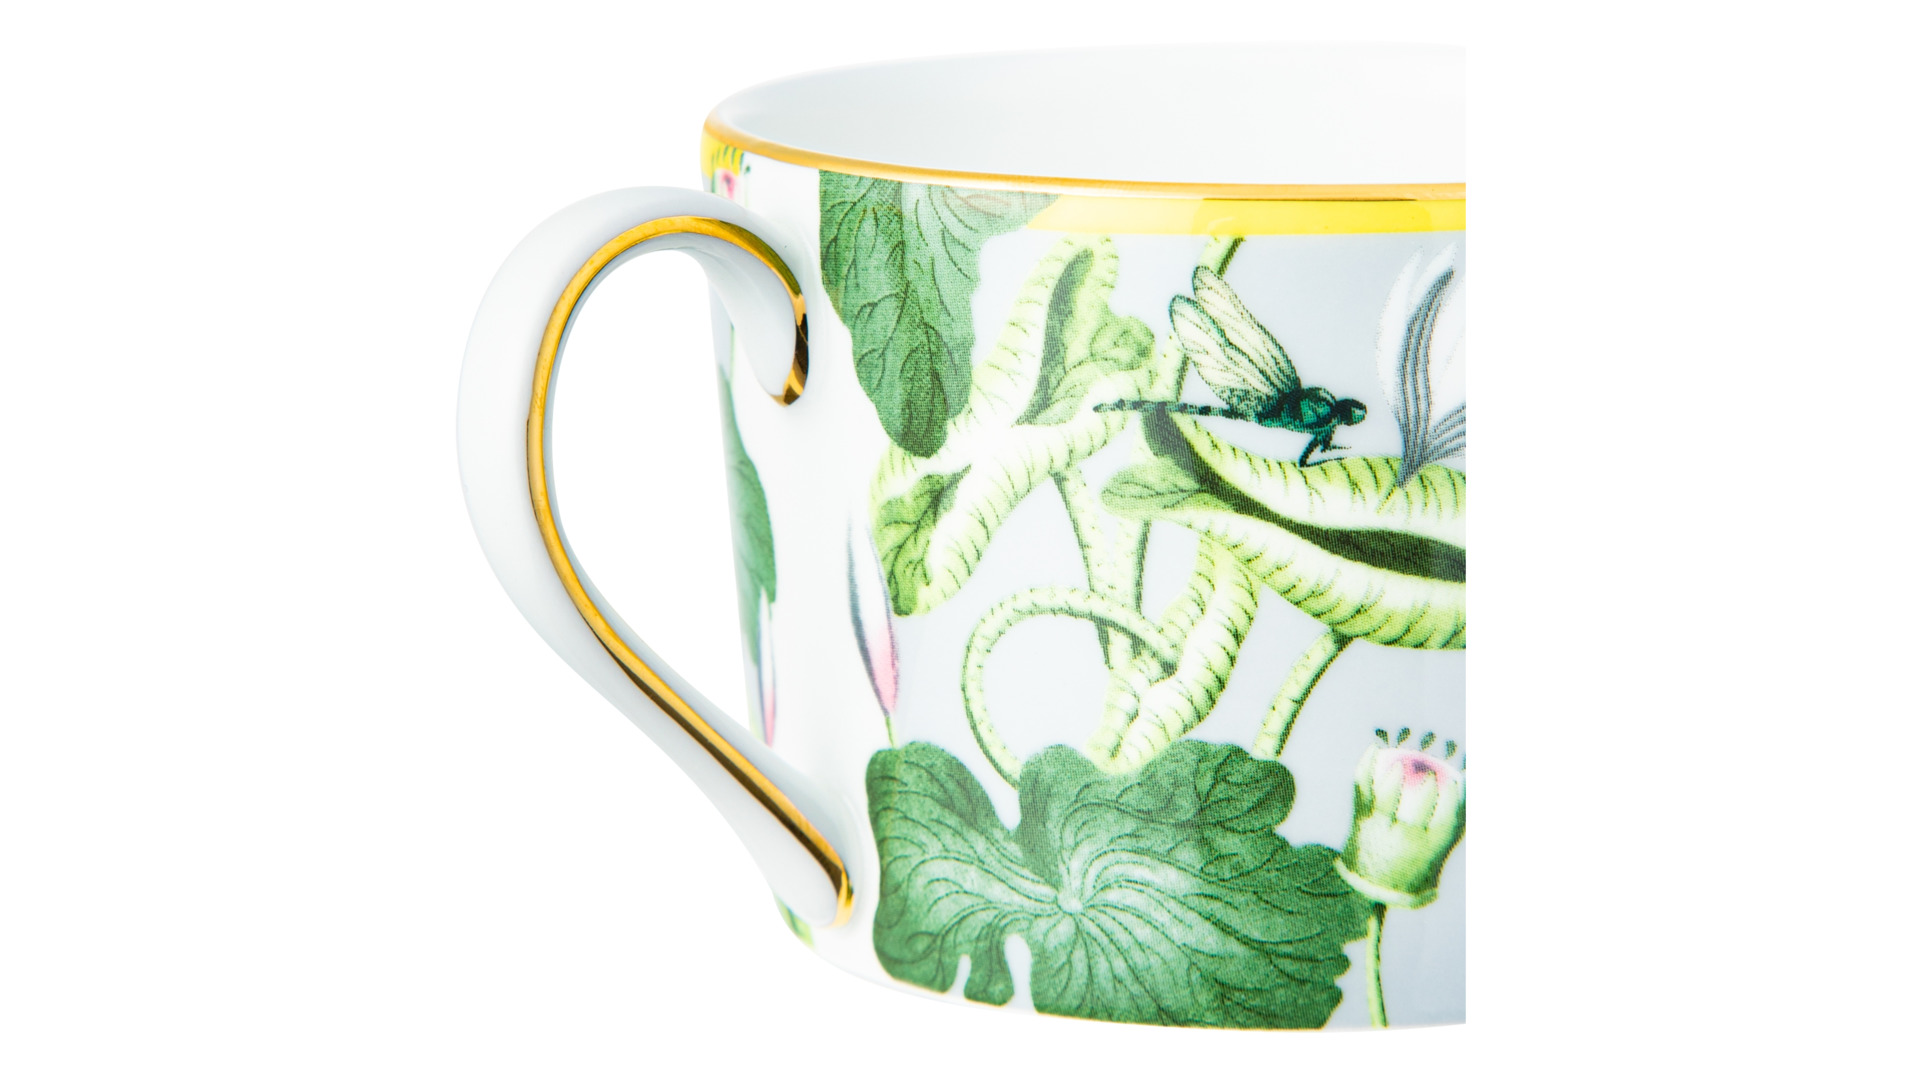 Чашка чайная с блюдцем Wedgwood Вандерласт Водяная лилия 180 мл, фарфор